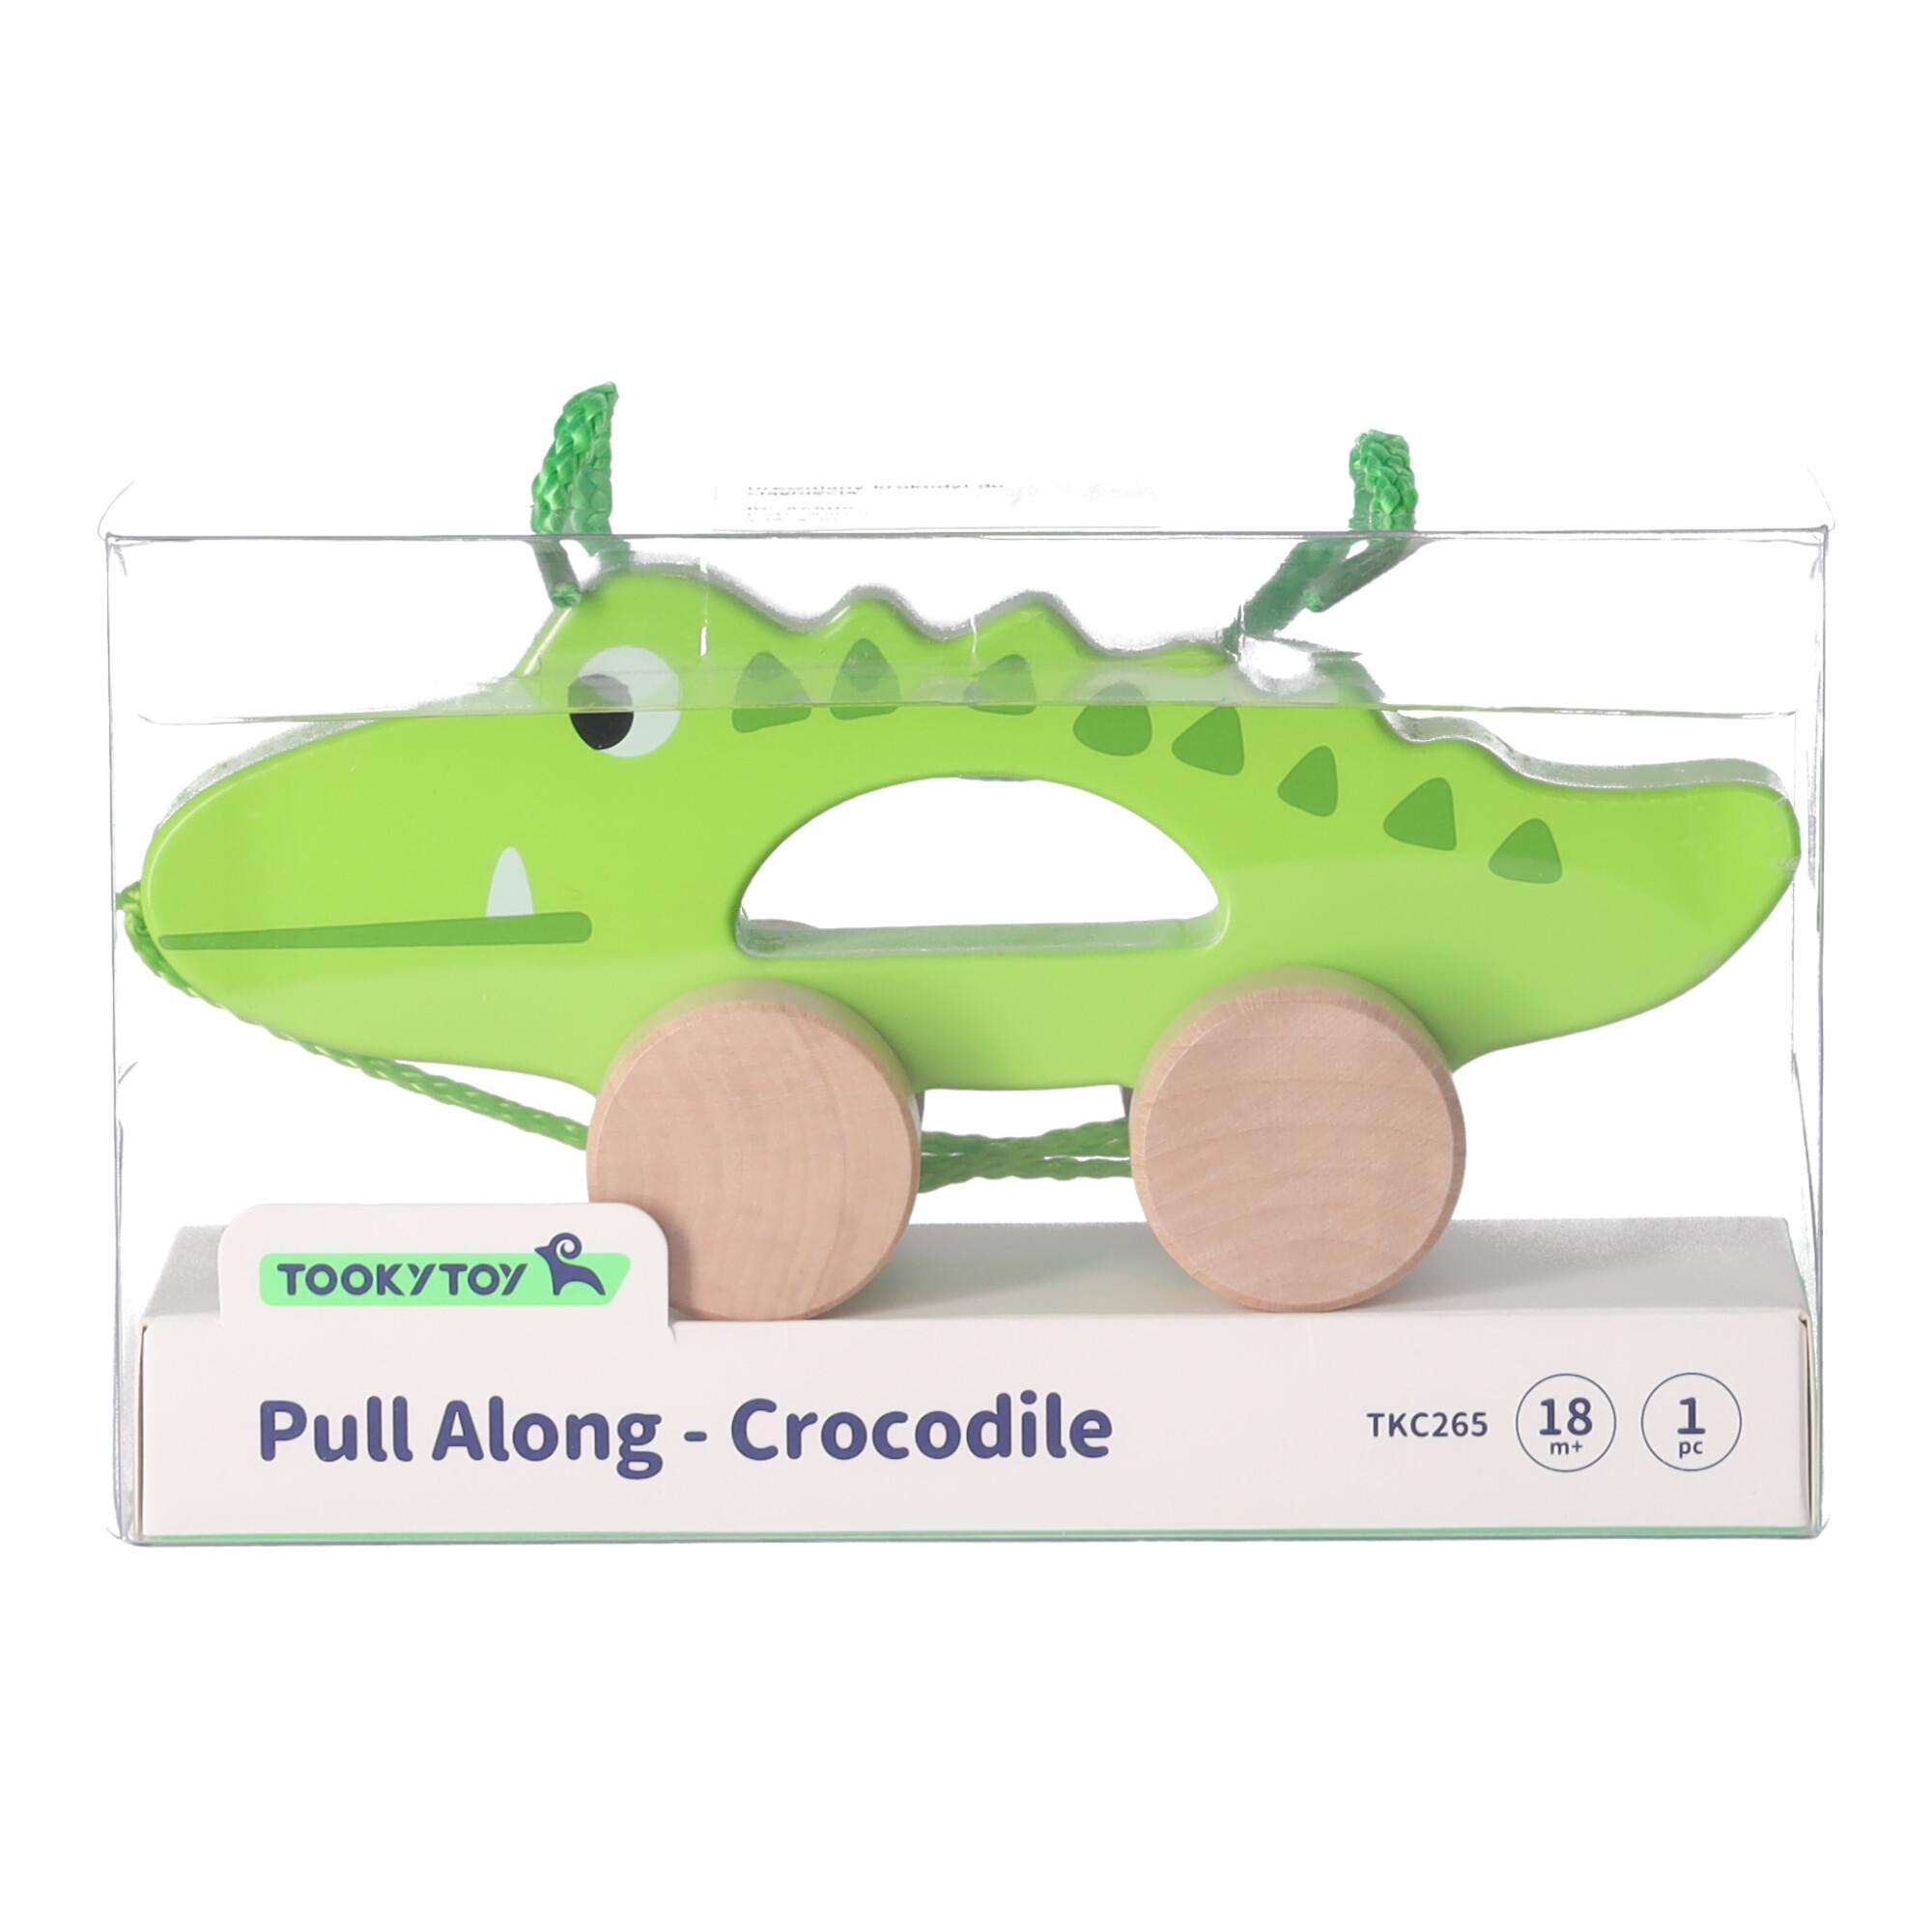 Pull Along-Crocodile